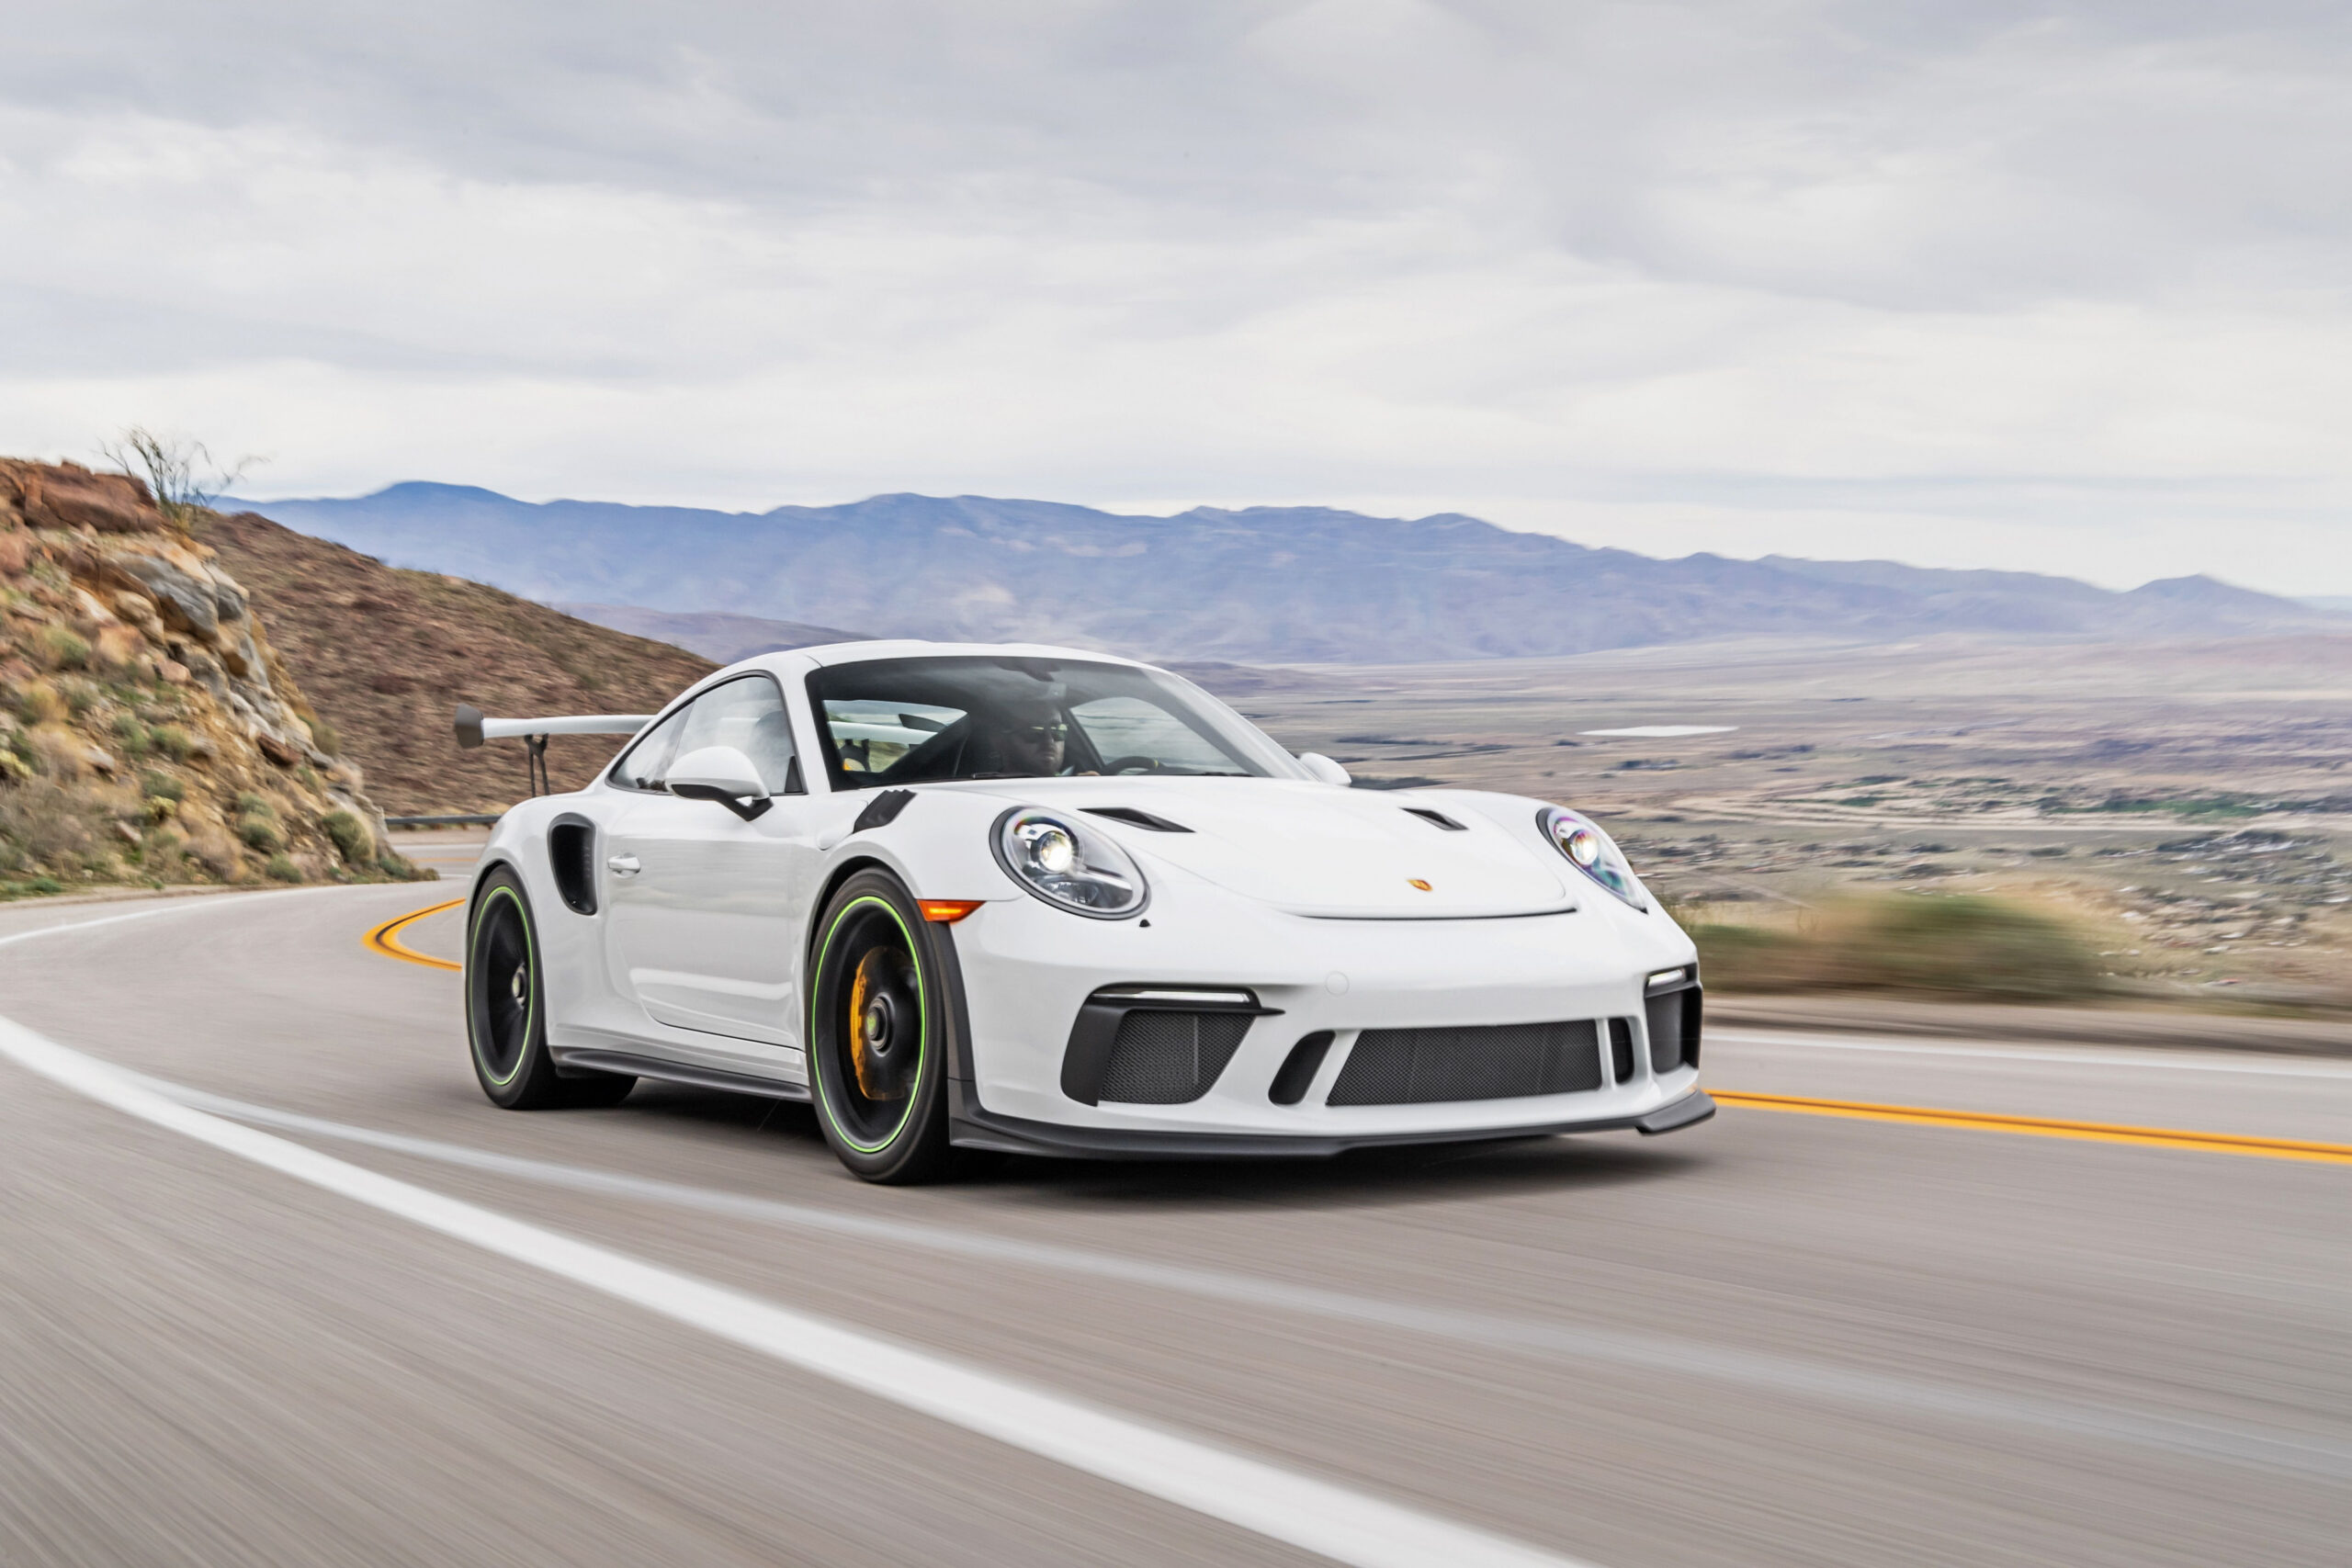 5 Porsche 5 Gt5 / Gt5 Rs Review, Pricing, And Specs Porsche 911 Gt3 Rs